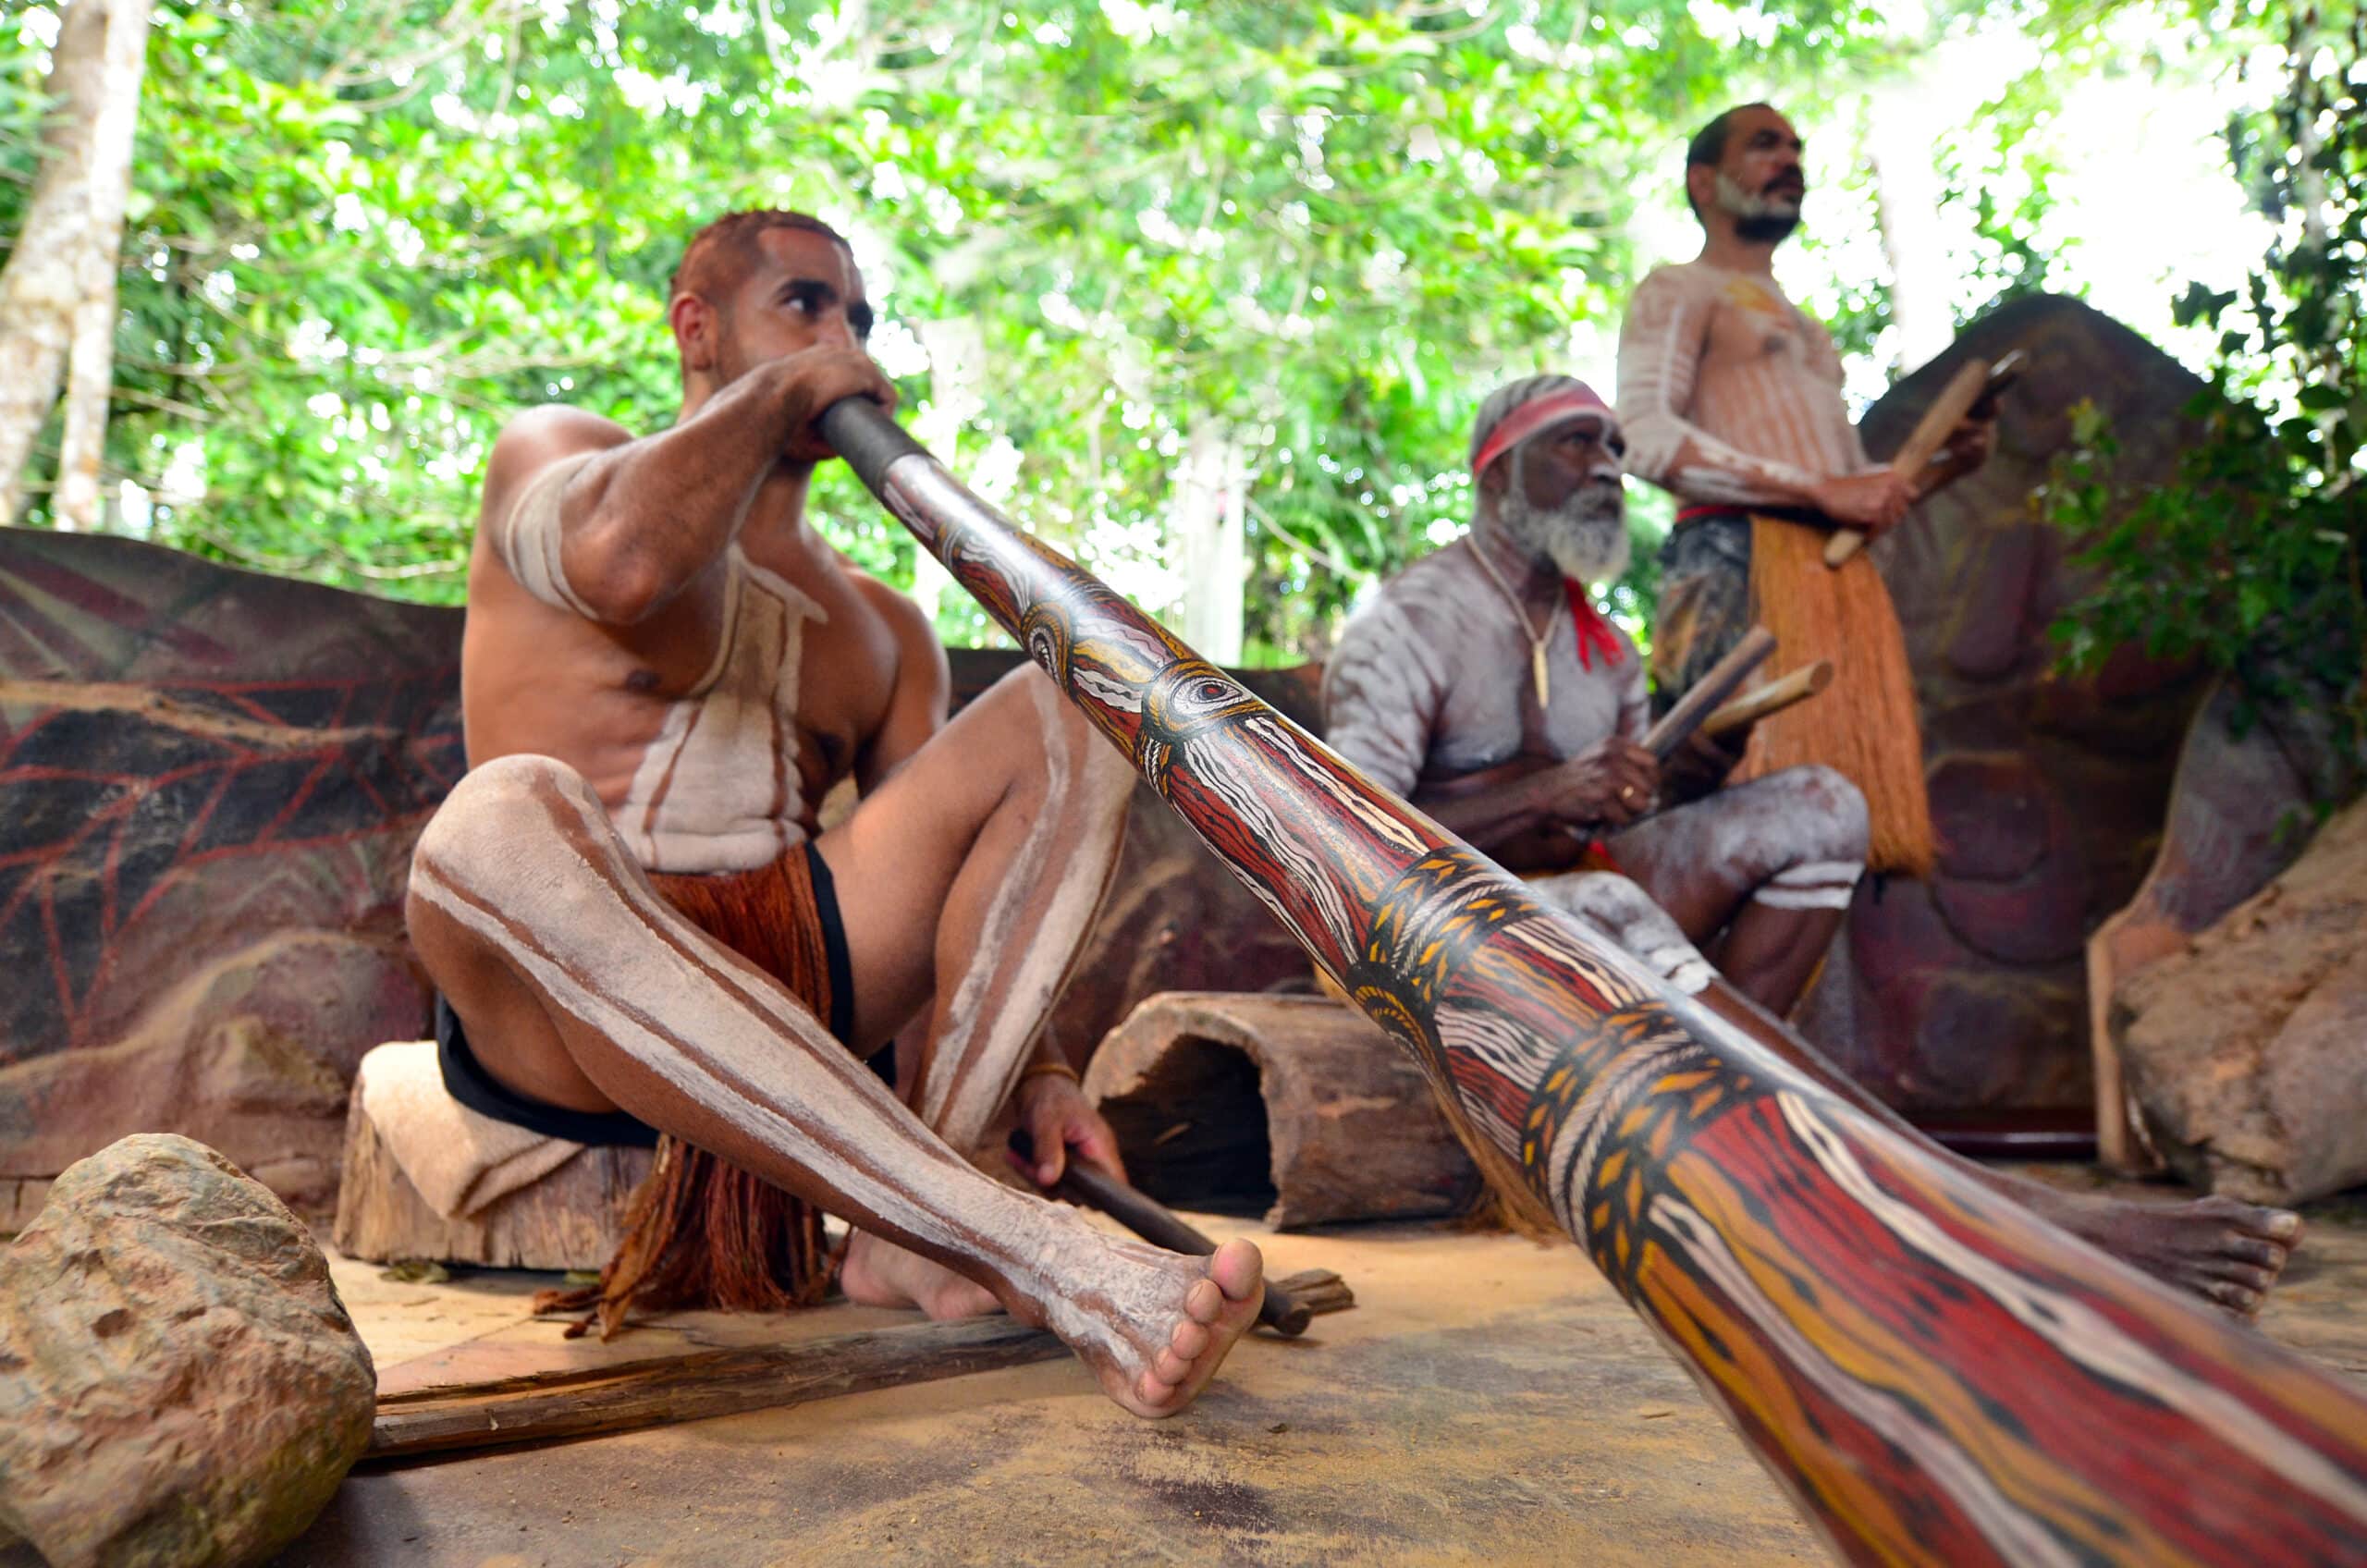 Australian Aboriginal men play Aboriginal music on didgeridoo and wooden instrument during Aboriginal culture show